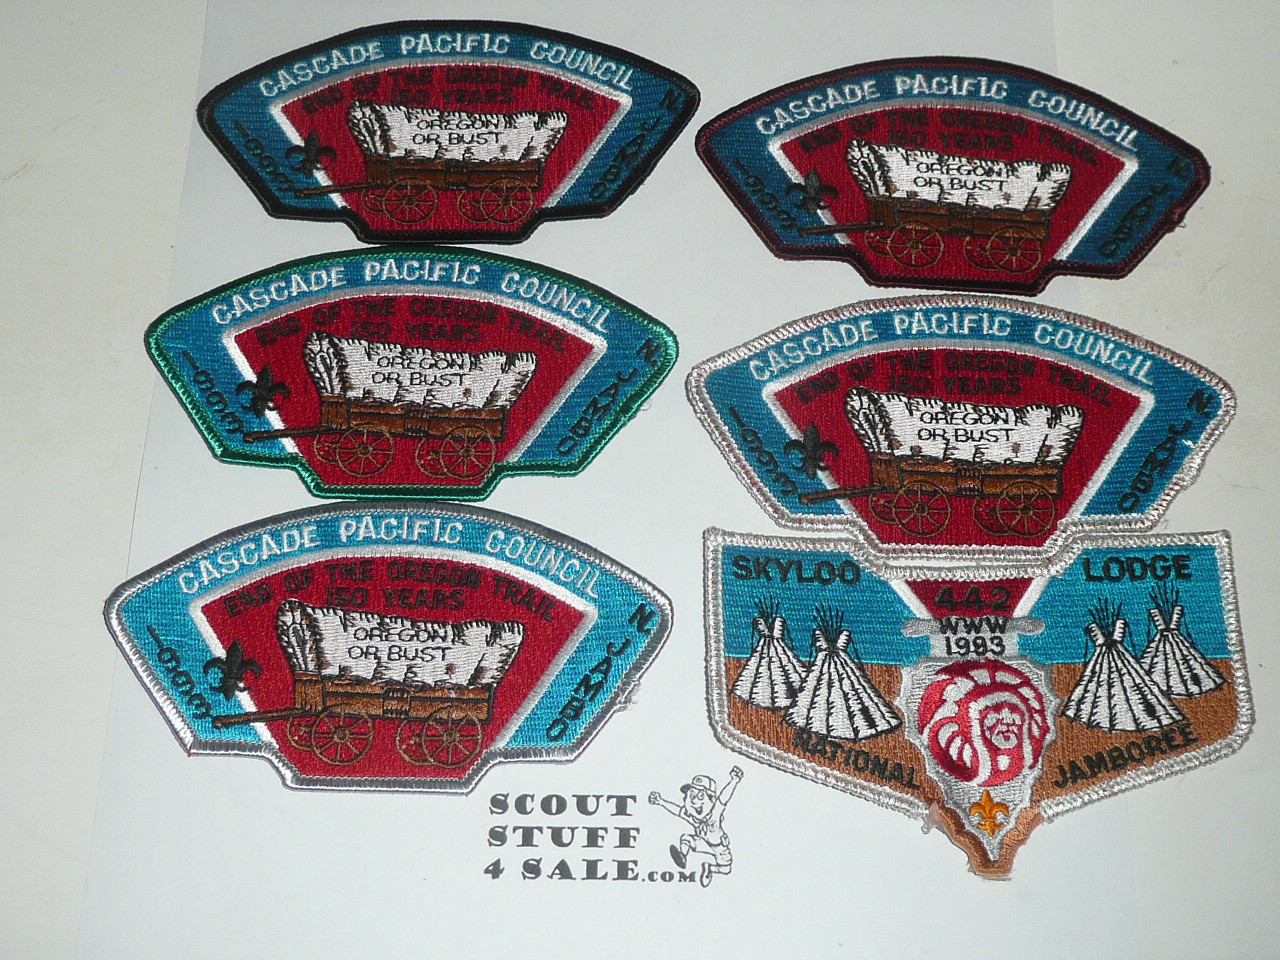 1993 National Jamboree JSP - Cascade Pacific Council, complete set of 11 patches